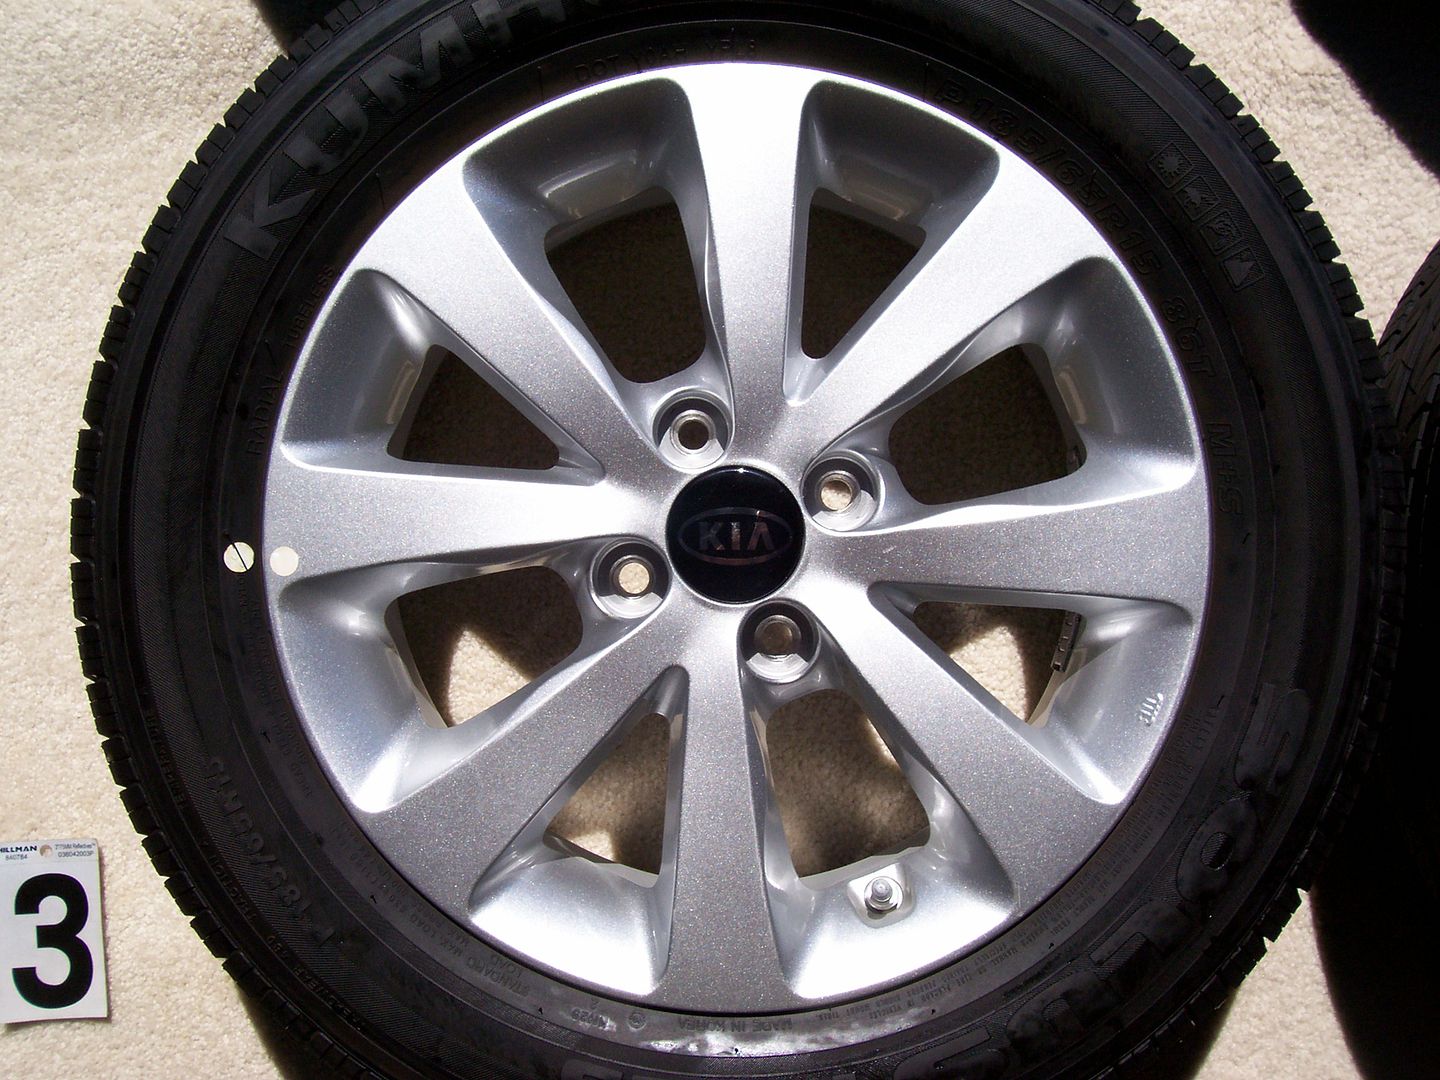 2012 Kia Rio 15" Wheels Rims Alloy TPMS Stock Factory Hyundai Accent 4x100mm